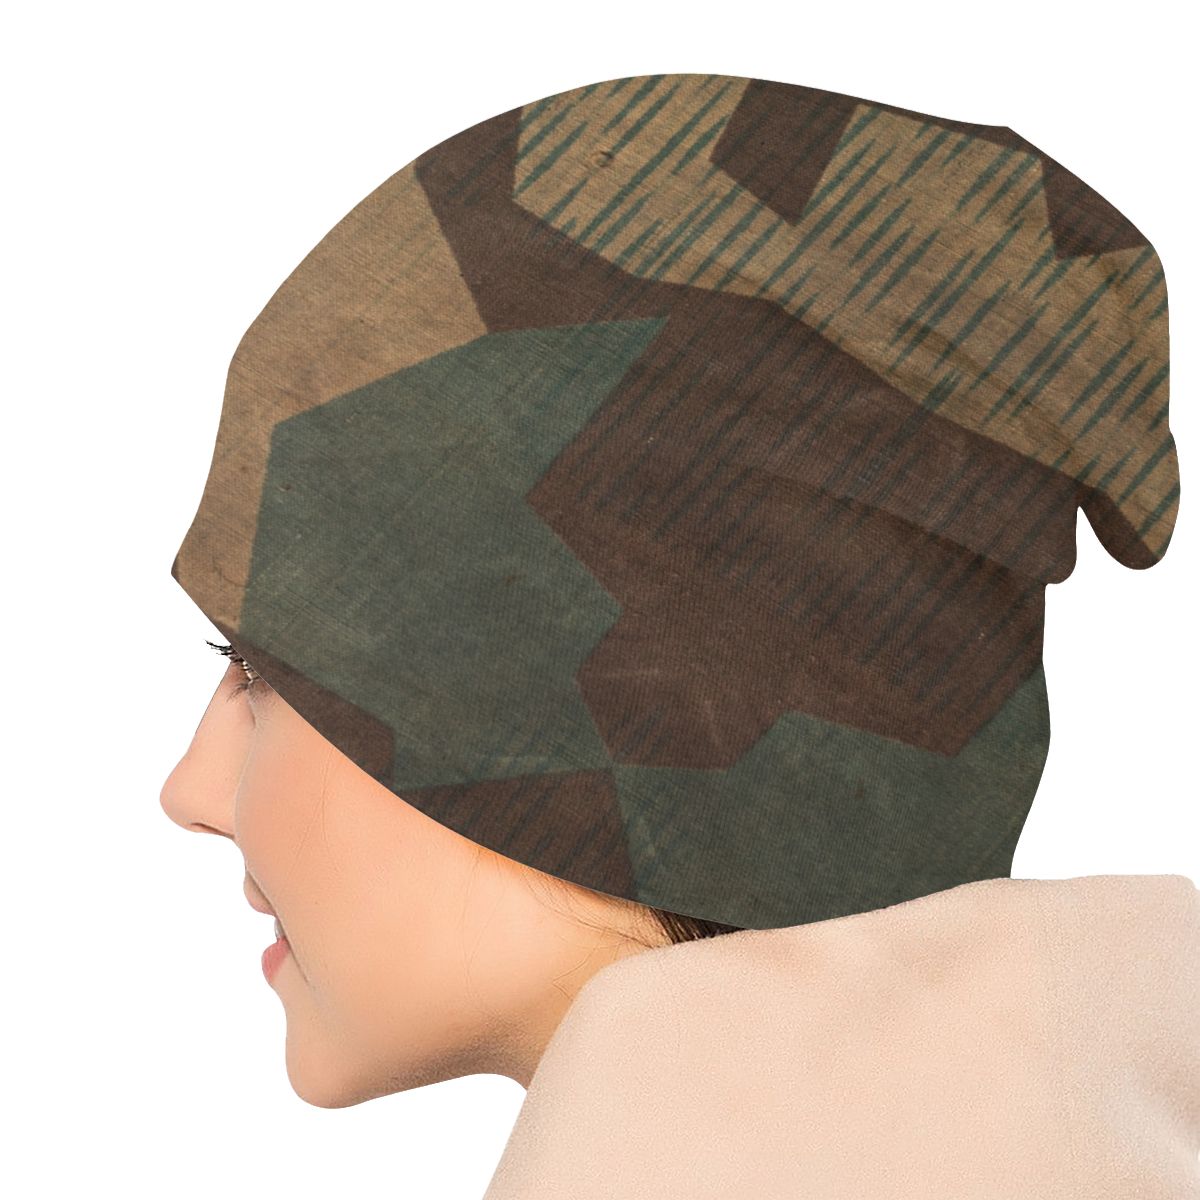 Splintertarn German WW2 Camouflage Bonnet Beanie Knitted Hat  Women Military Army Tactical Camo Warm Winter Skullies Beanies Cap